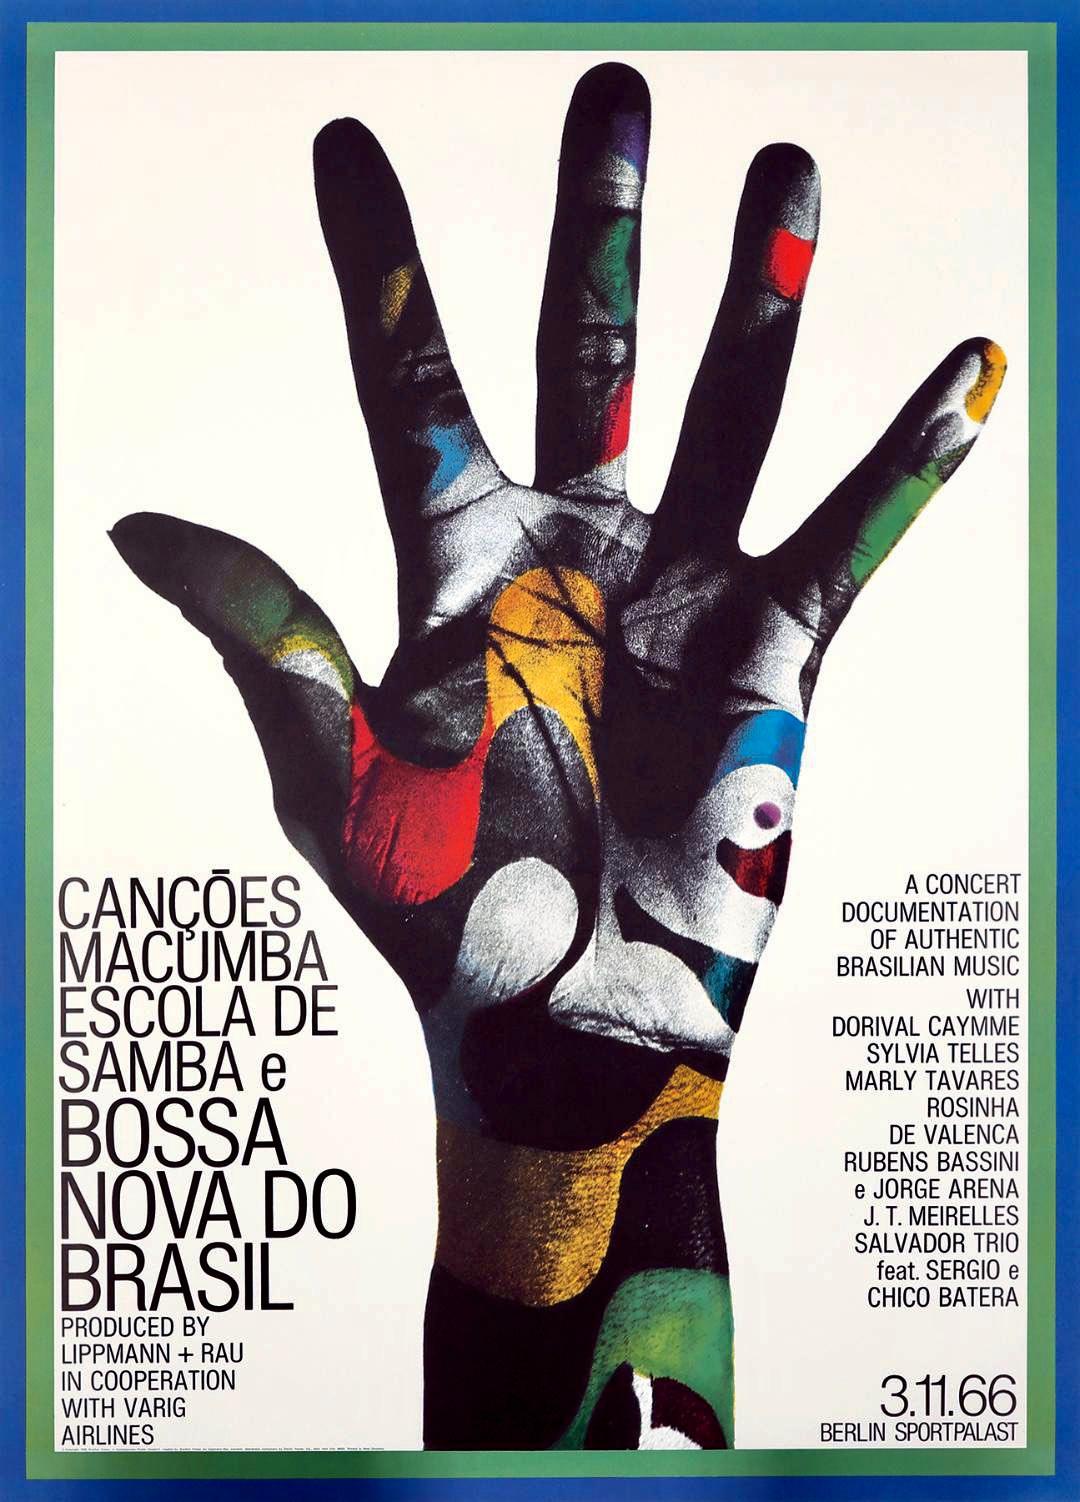 Günther Kieser Abstract Print – Plakat Bossa Nova do Brasil von Gunther Kieser, 1966